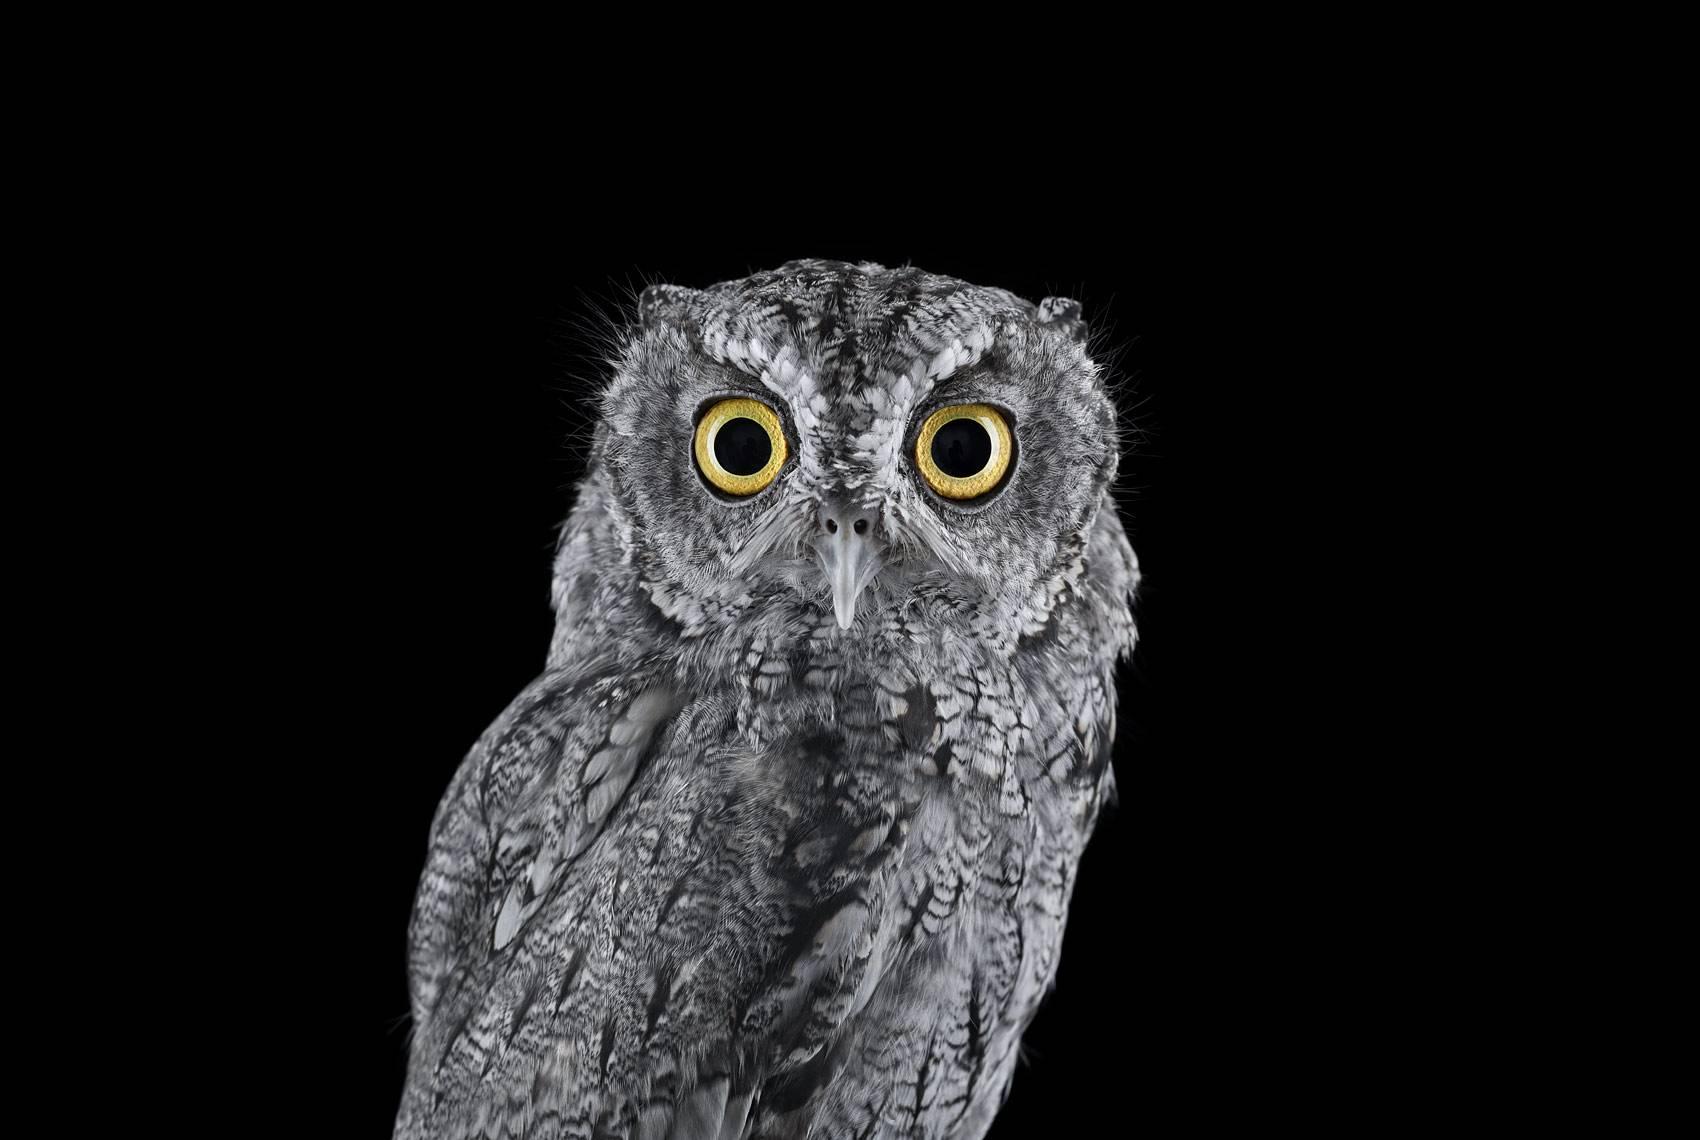 Brad Wilson Color Photograph - Western Screech Owl #4, Espanola, NM, 2016, color photograph, signed 